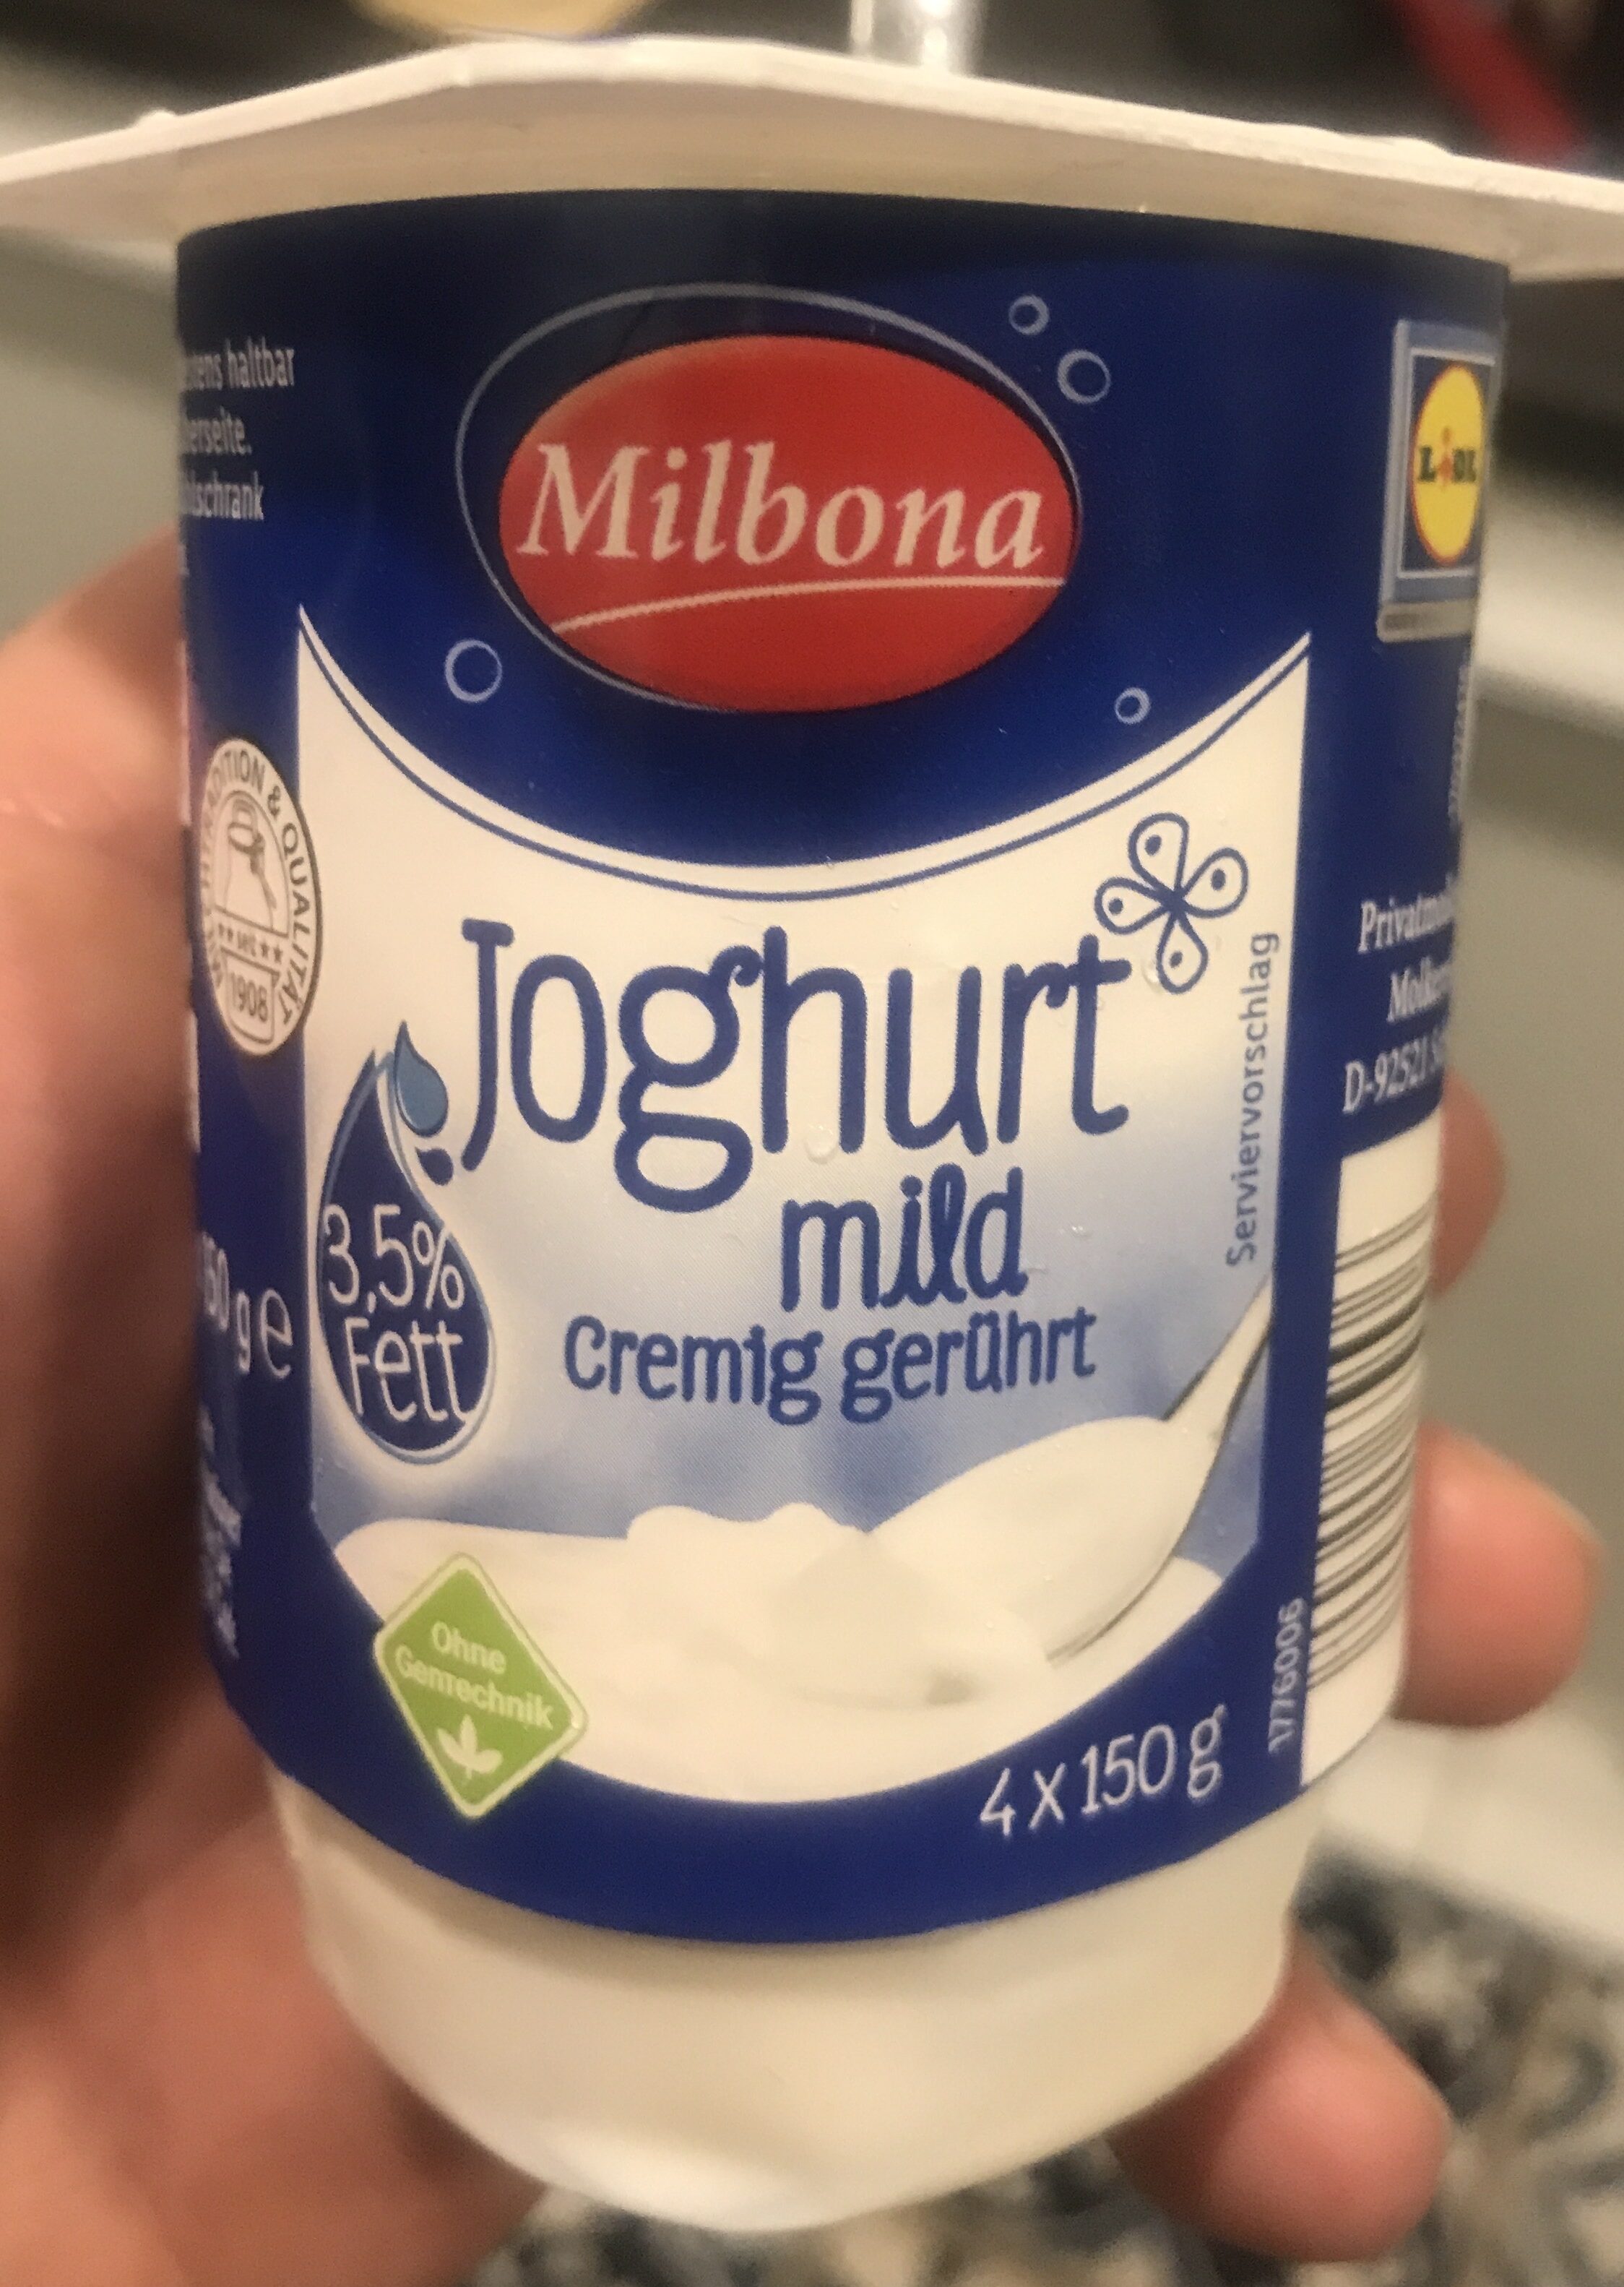 Joghurt mild - Product - de